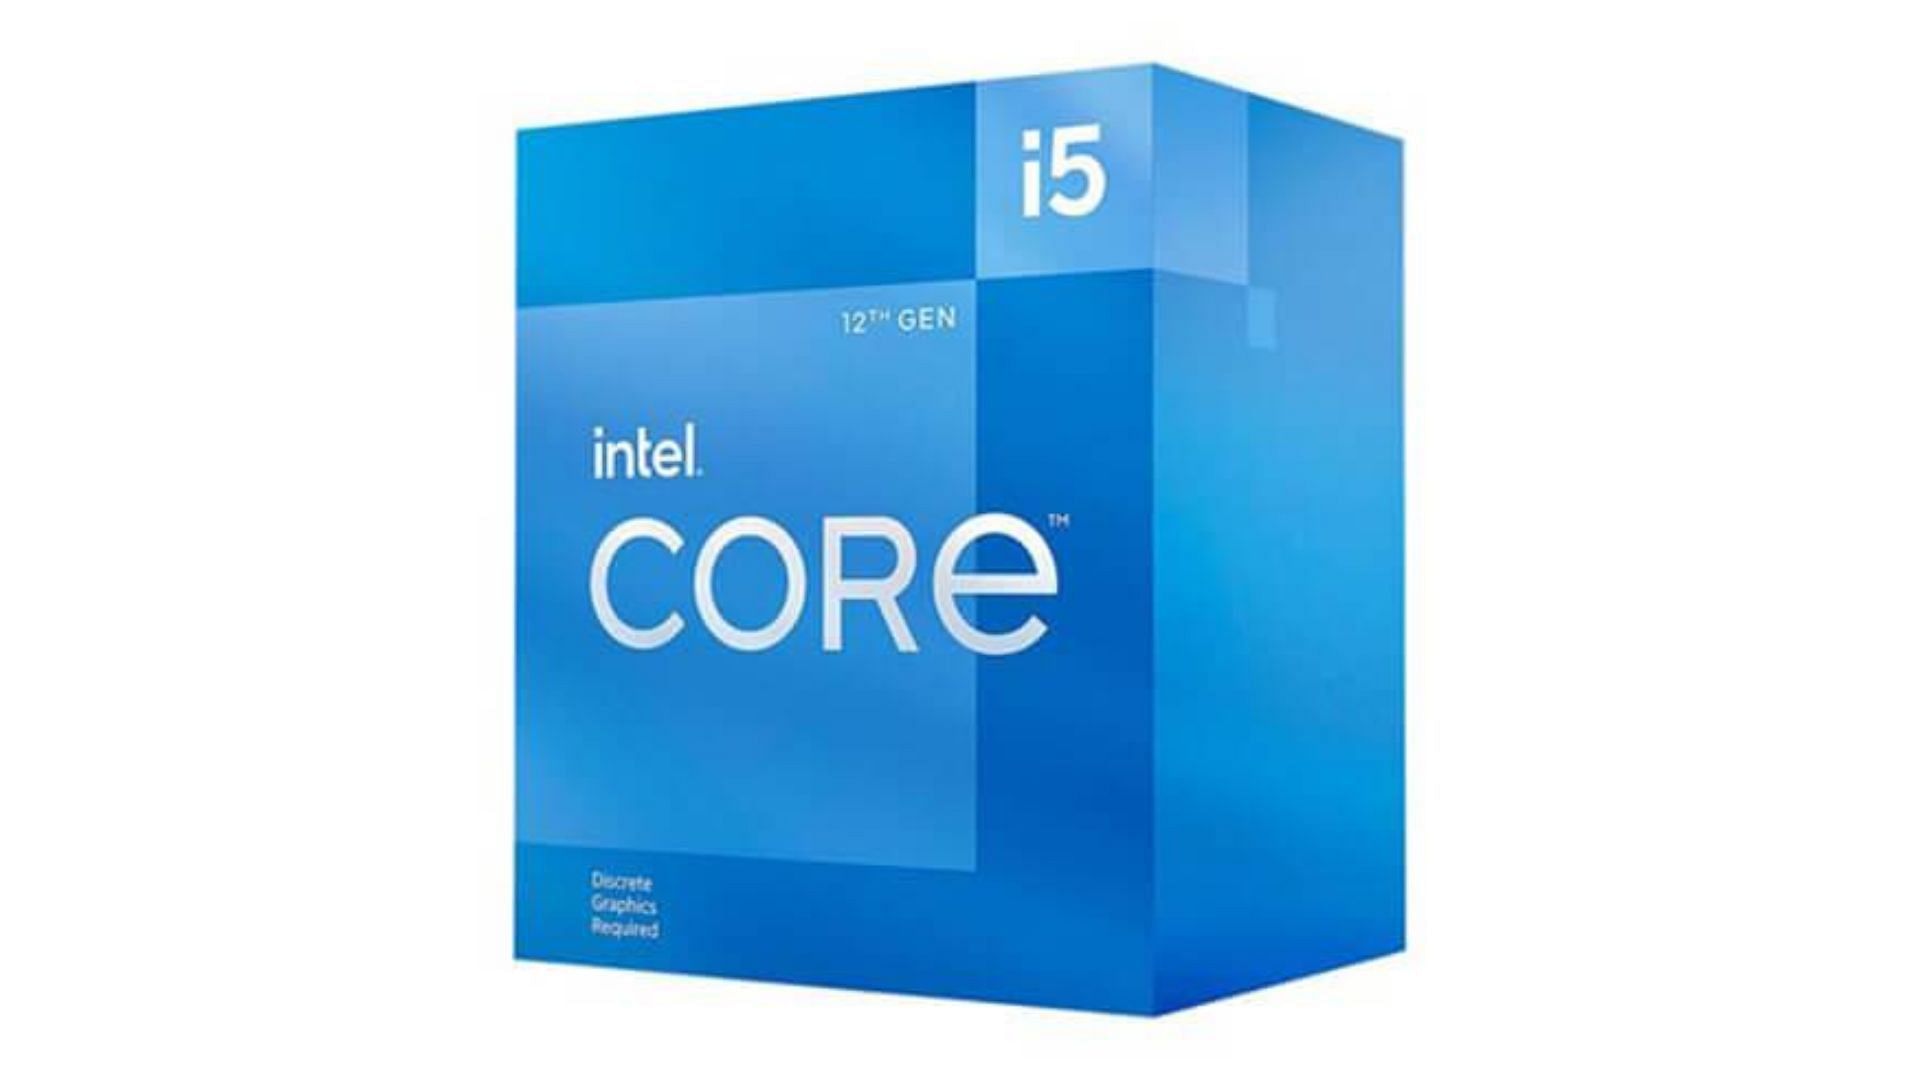 The Core i5 12400F (Image via Intel)